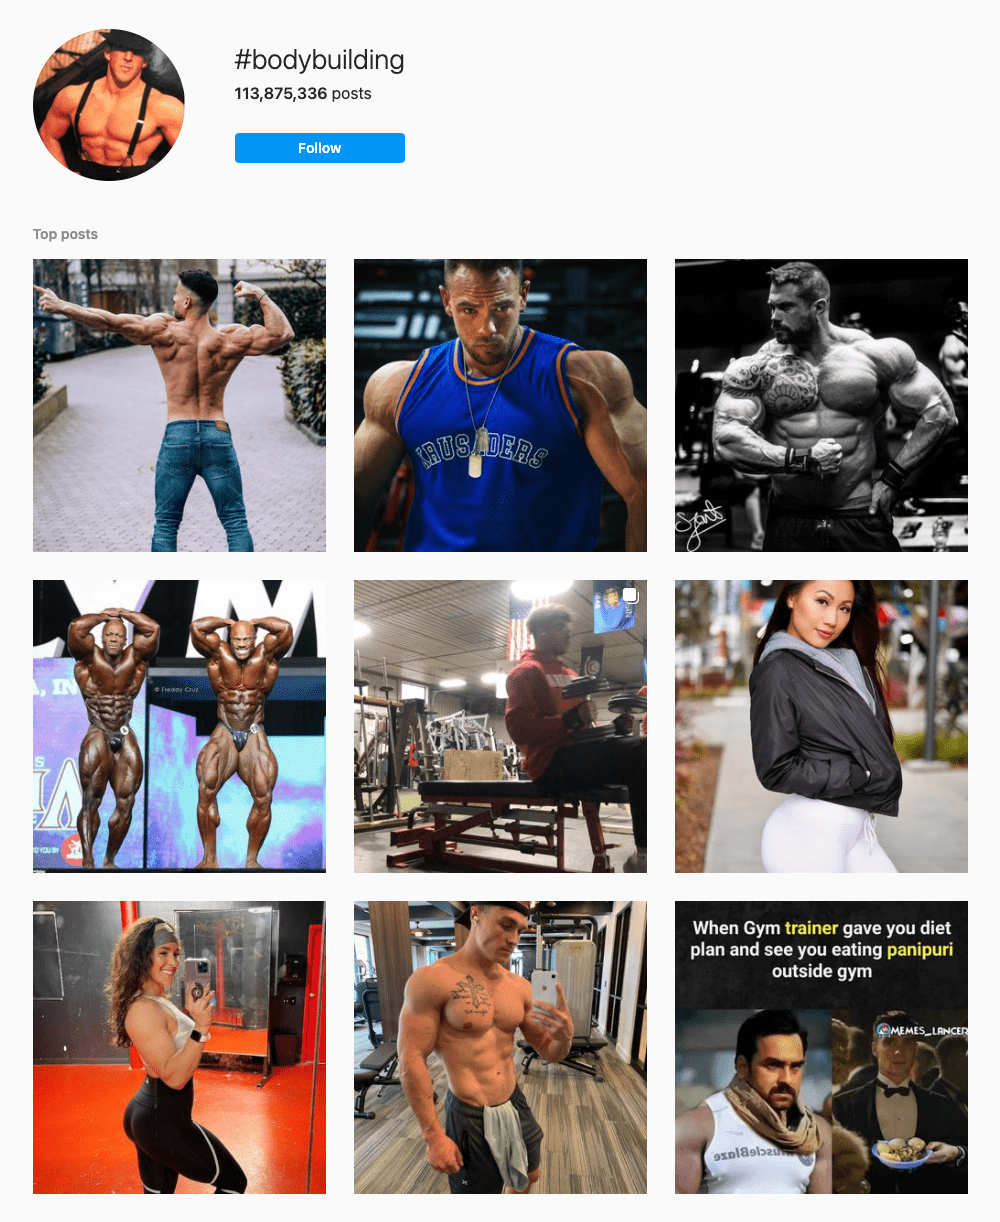 #bodybuilding Hashtags for Instagram